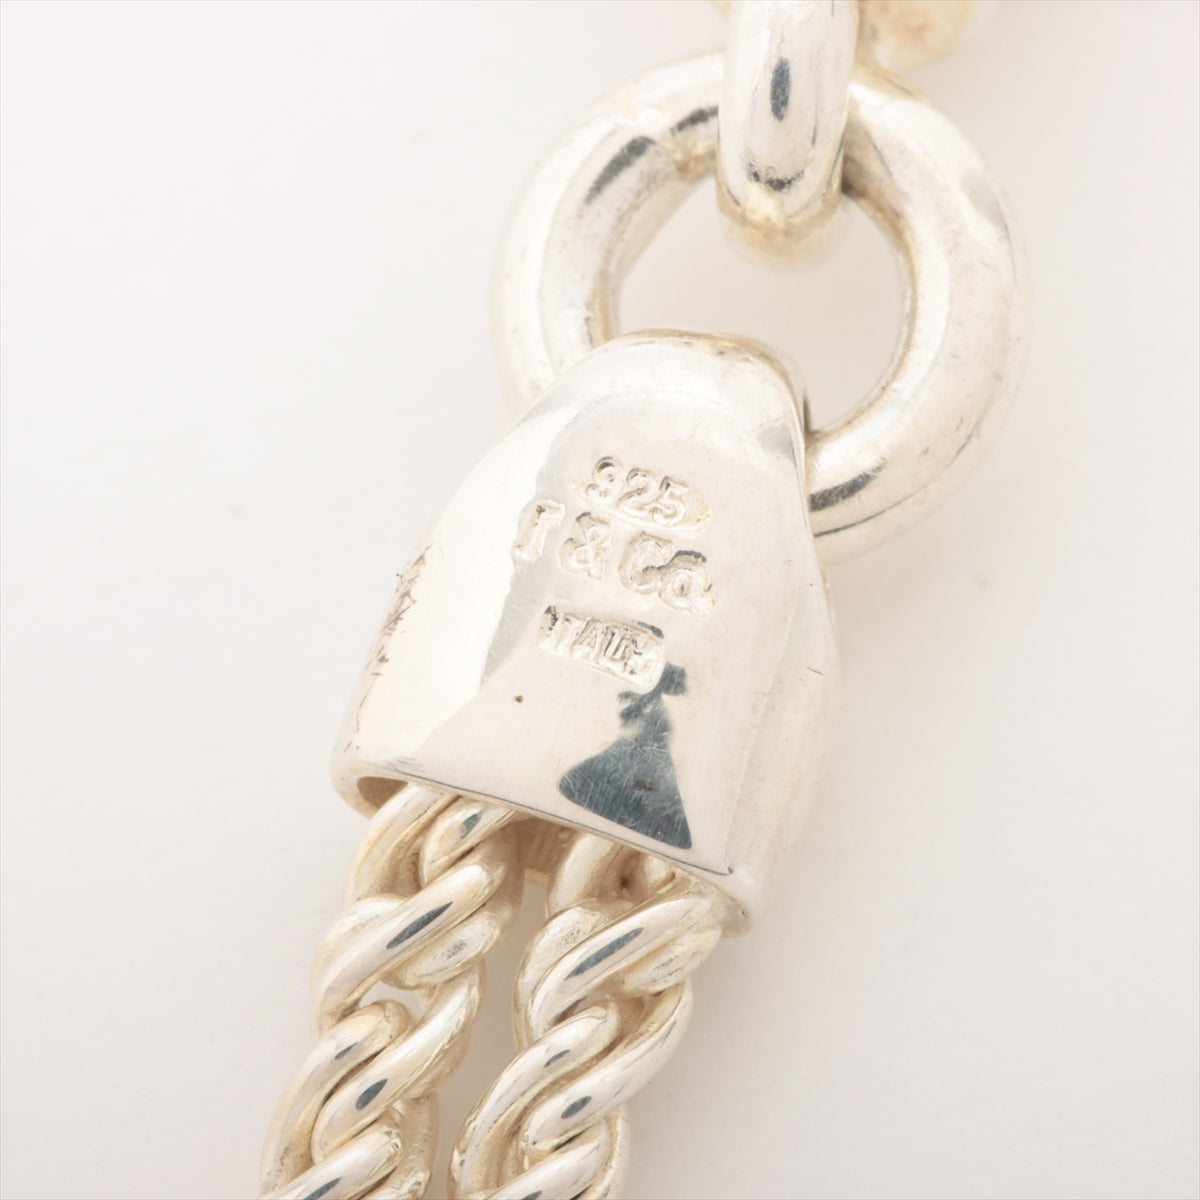 Tiffany Double rope Bracelet 925 17.7g Silver